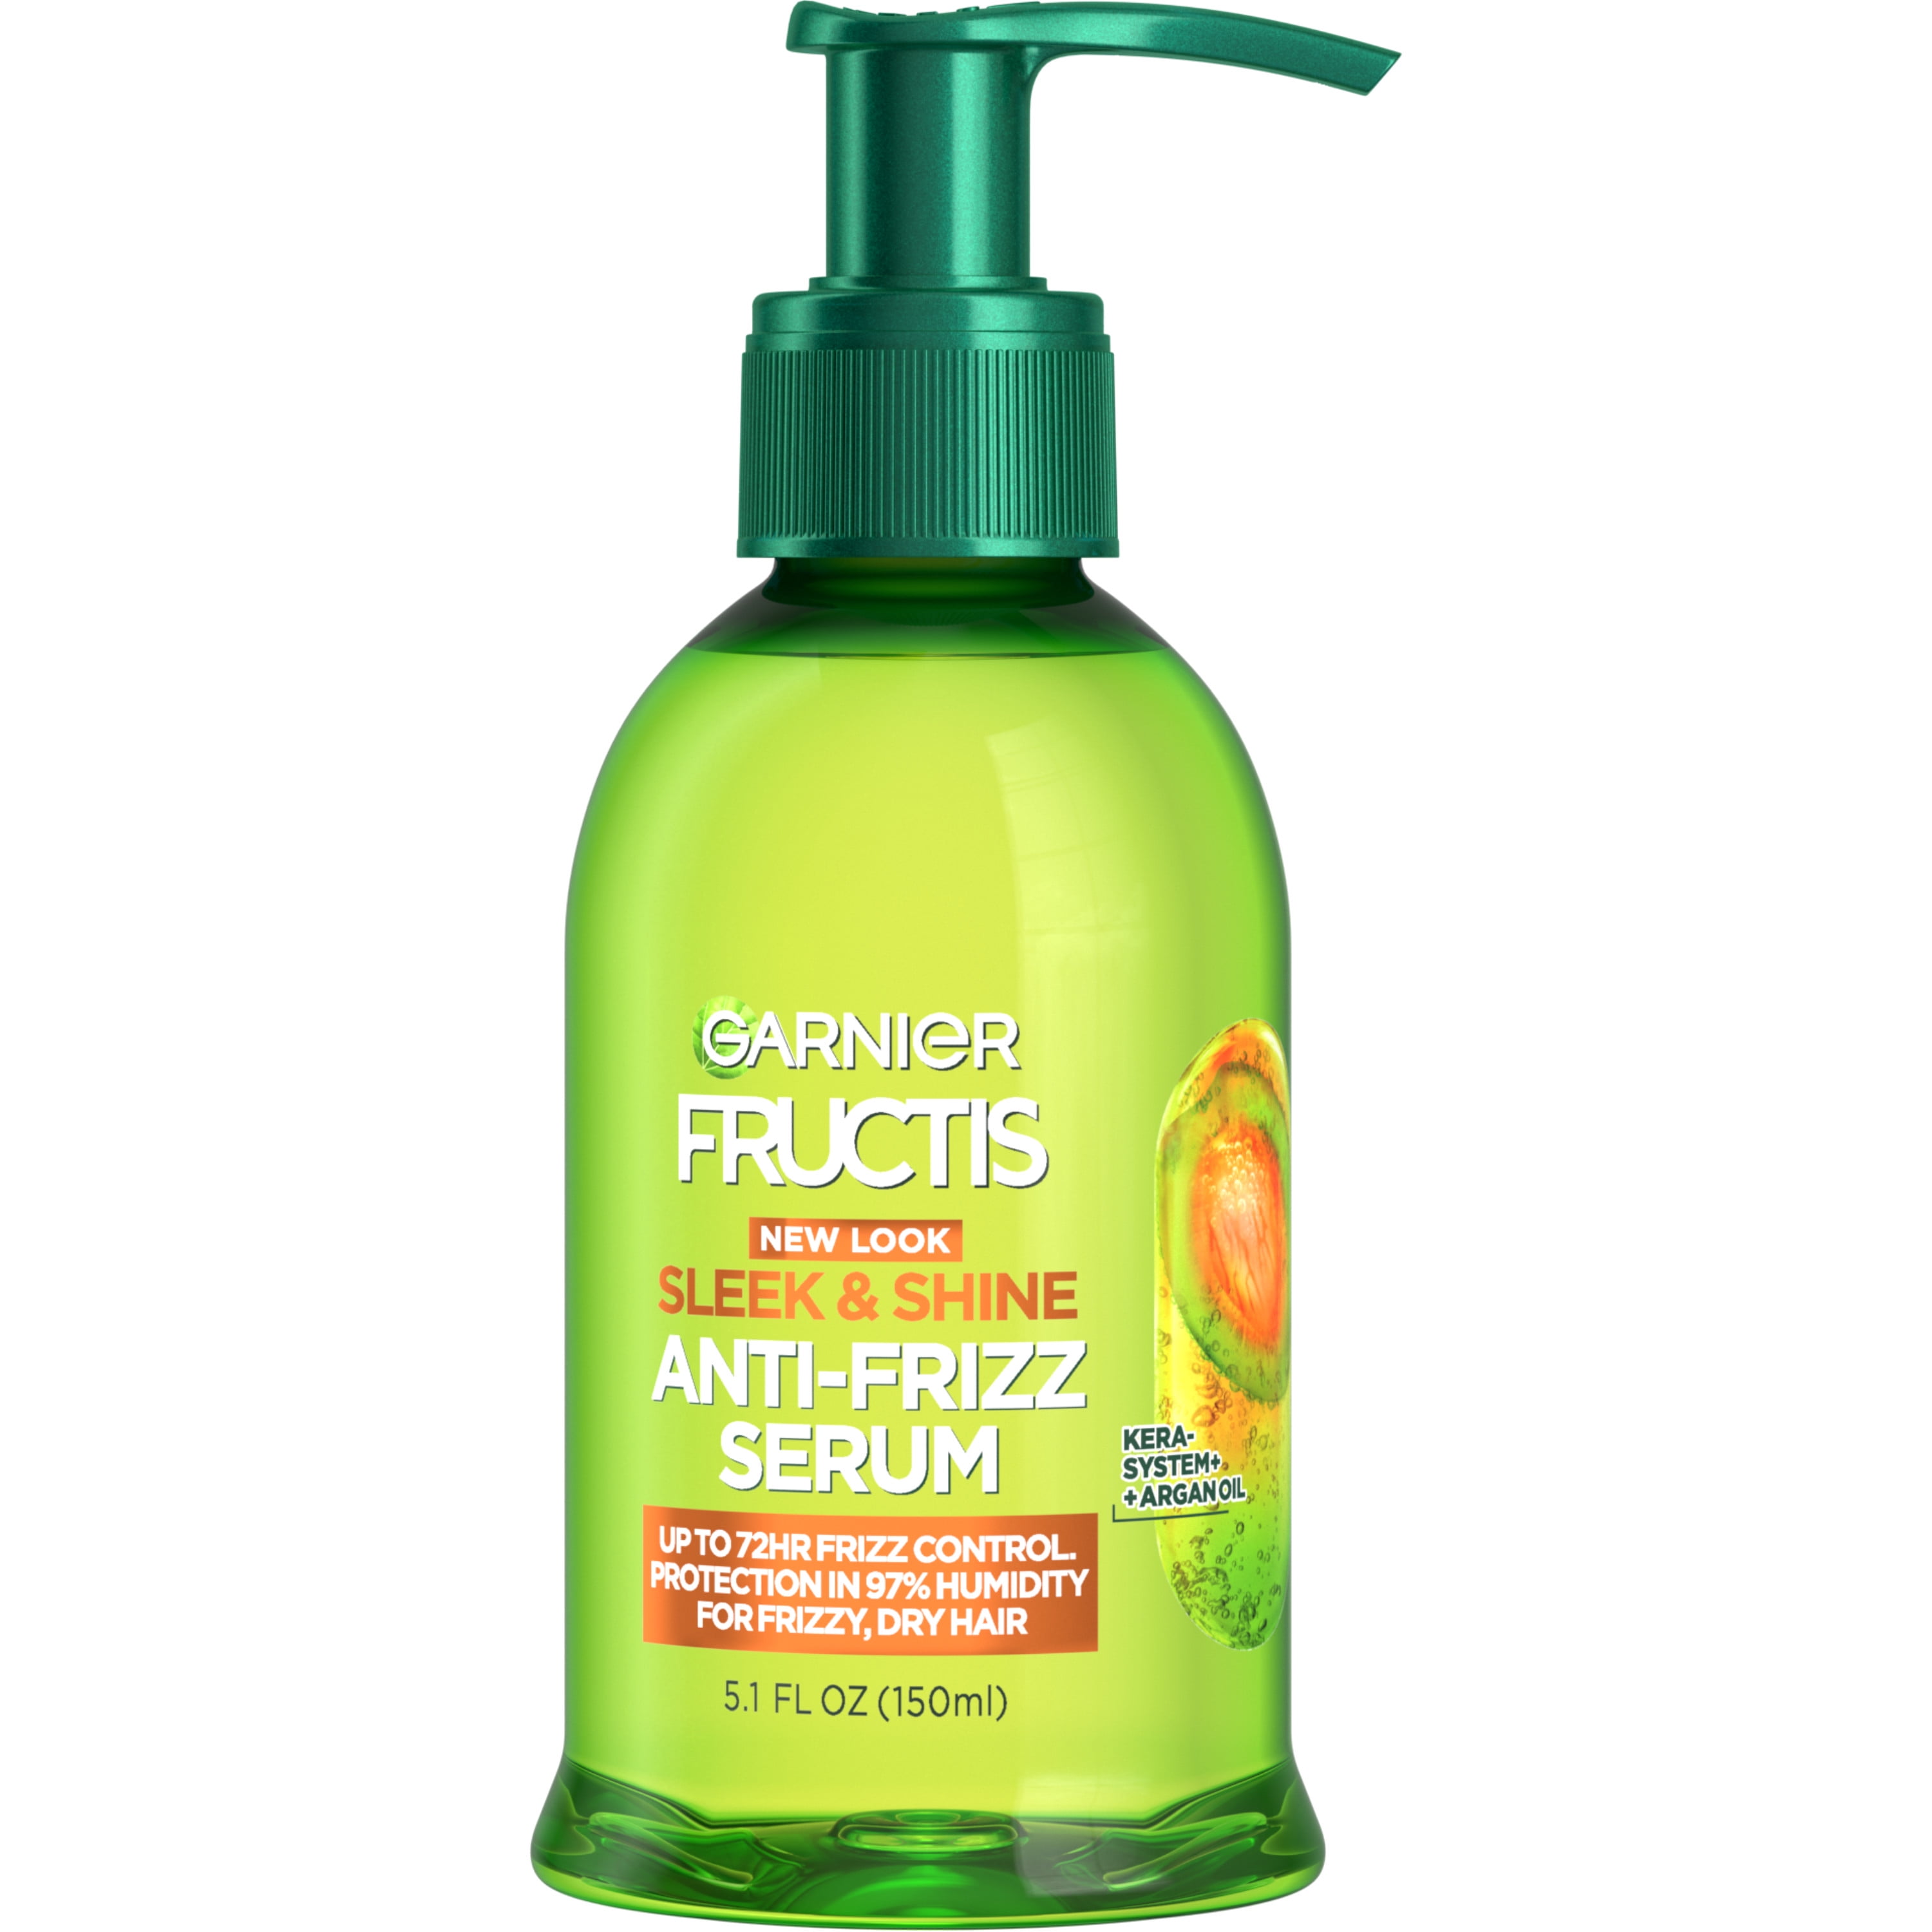 Garnier Fructis Style Sleek & Shine Anti-Humidity Hairspray,  oz. -  